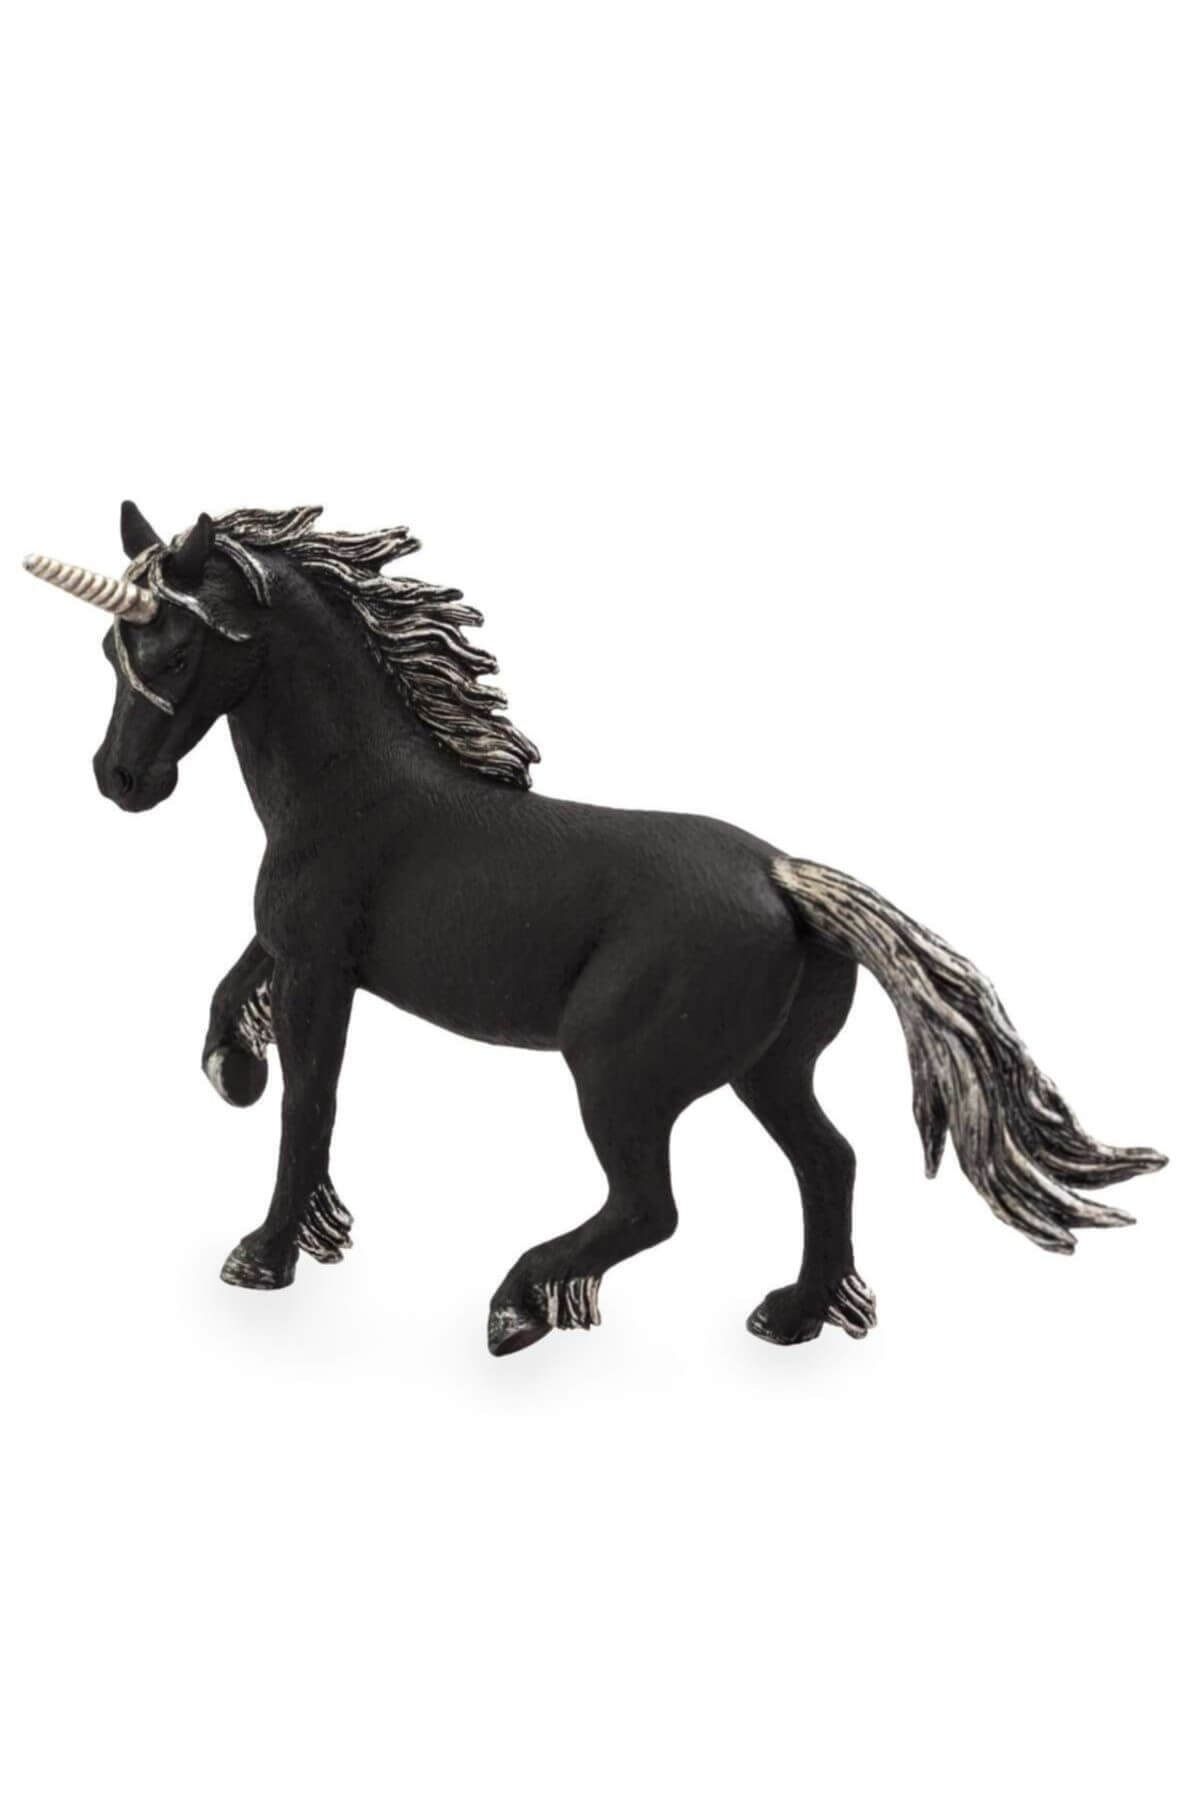 Animal Planet Siyah Unicorn Model Figür /